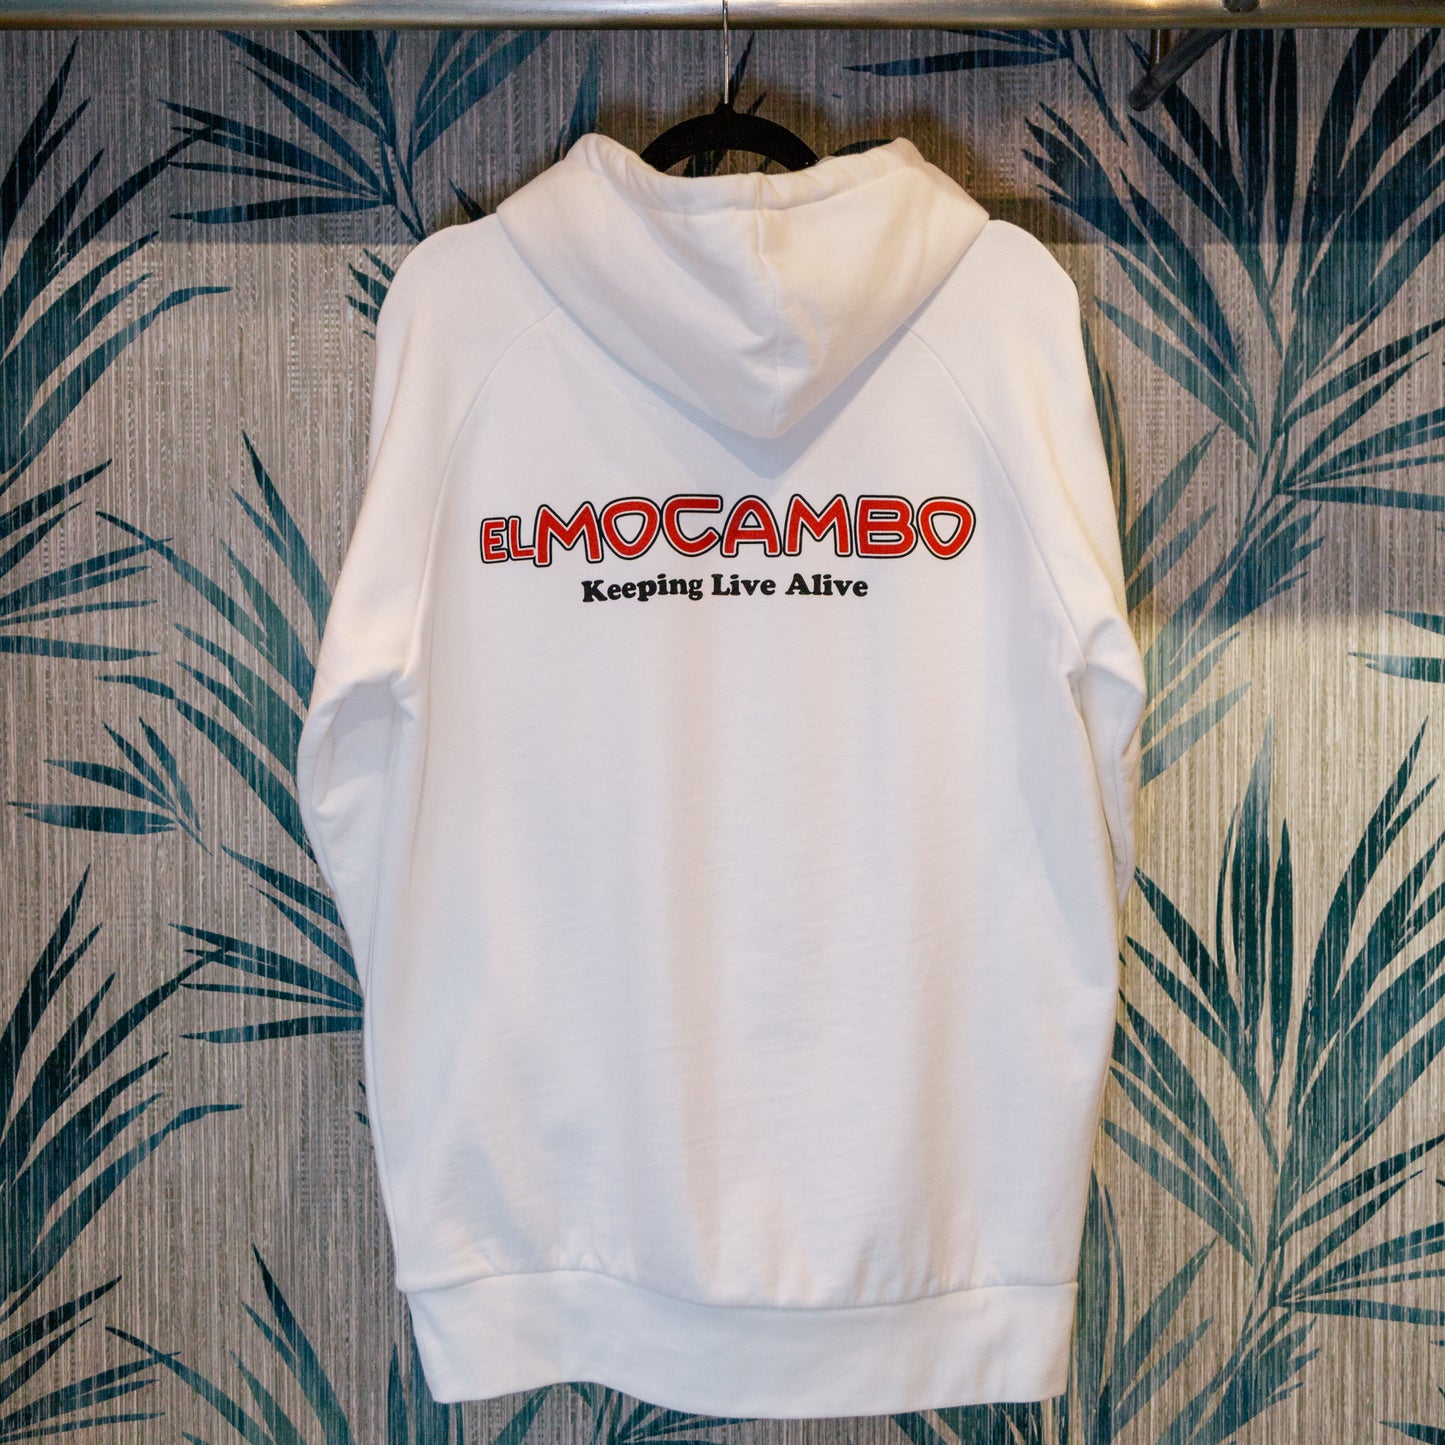 NEW El Mocambo "Sunset Sweater"